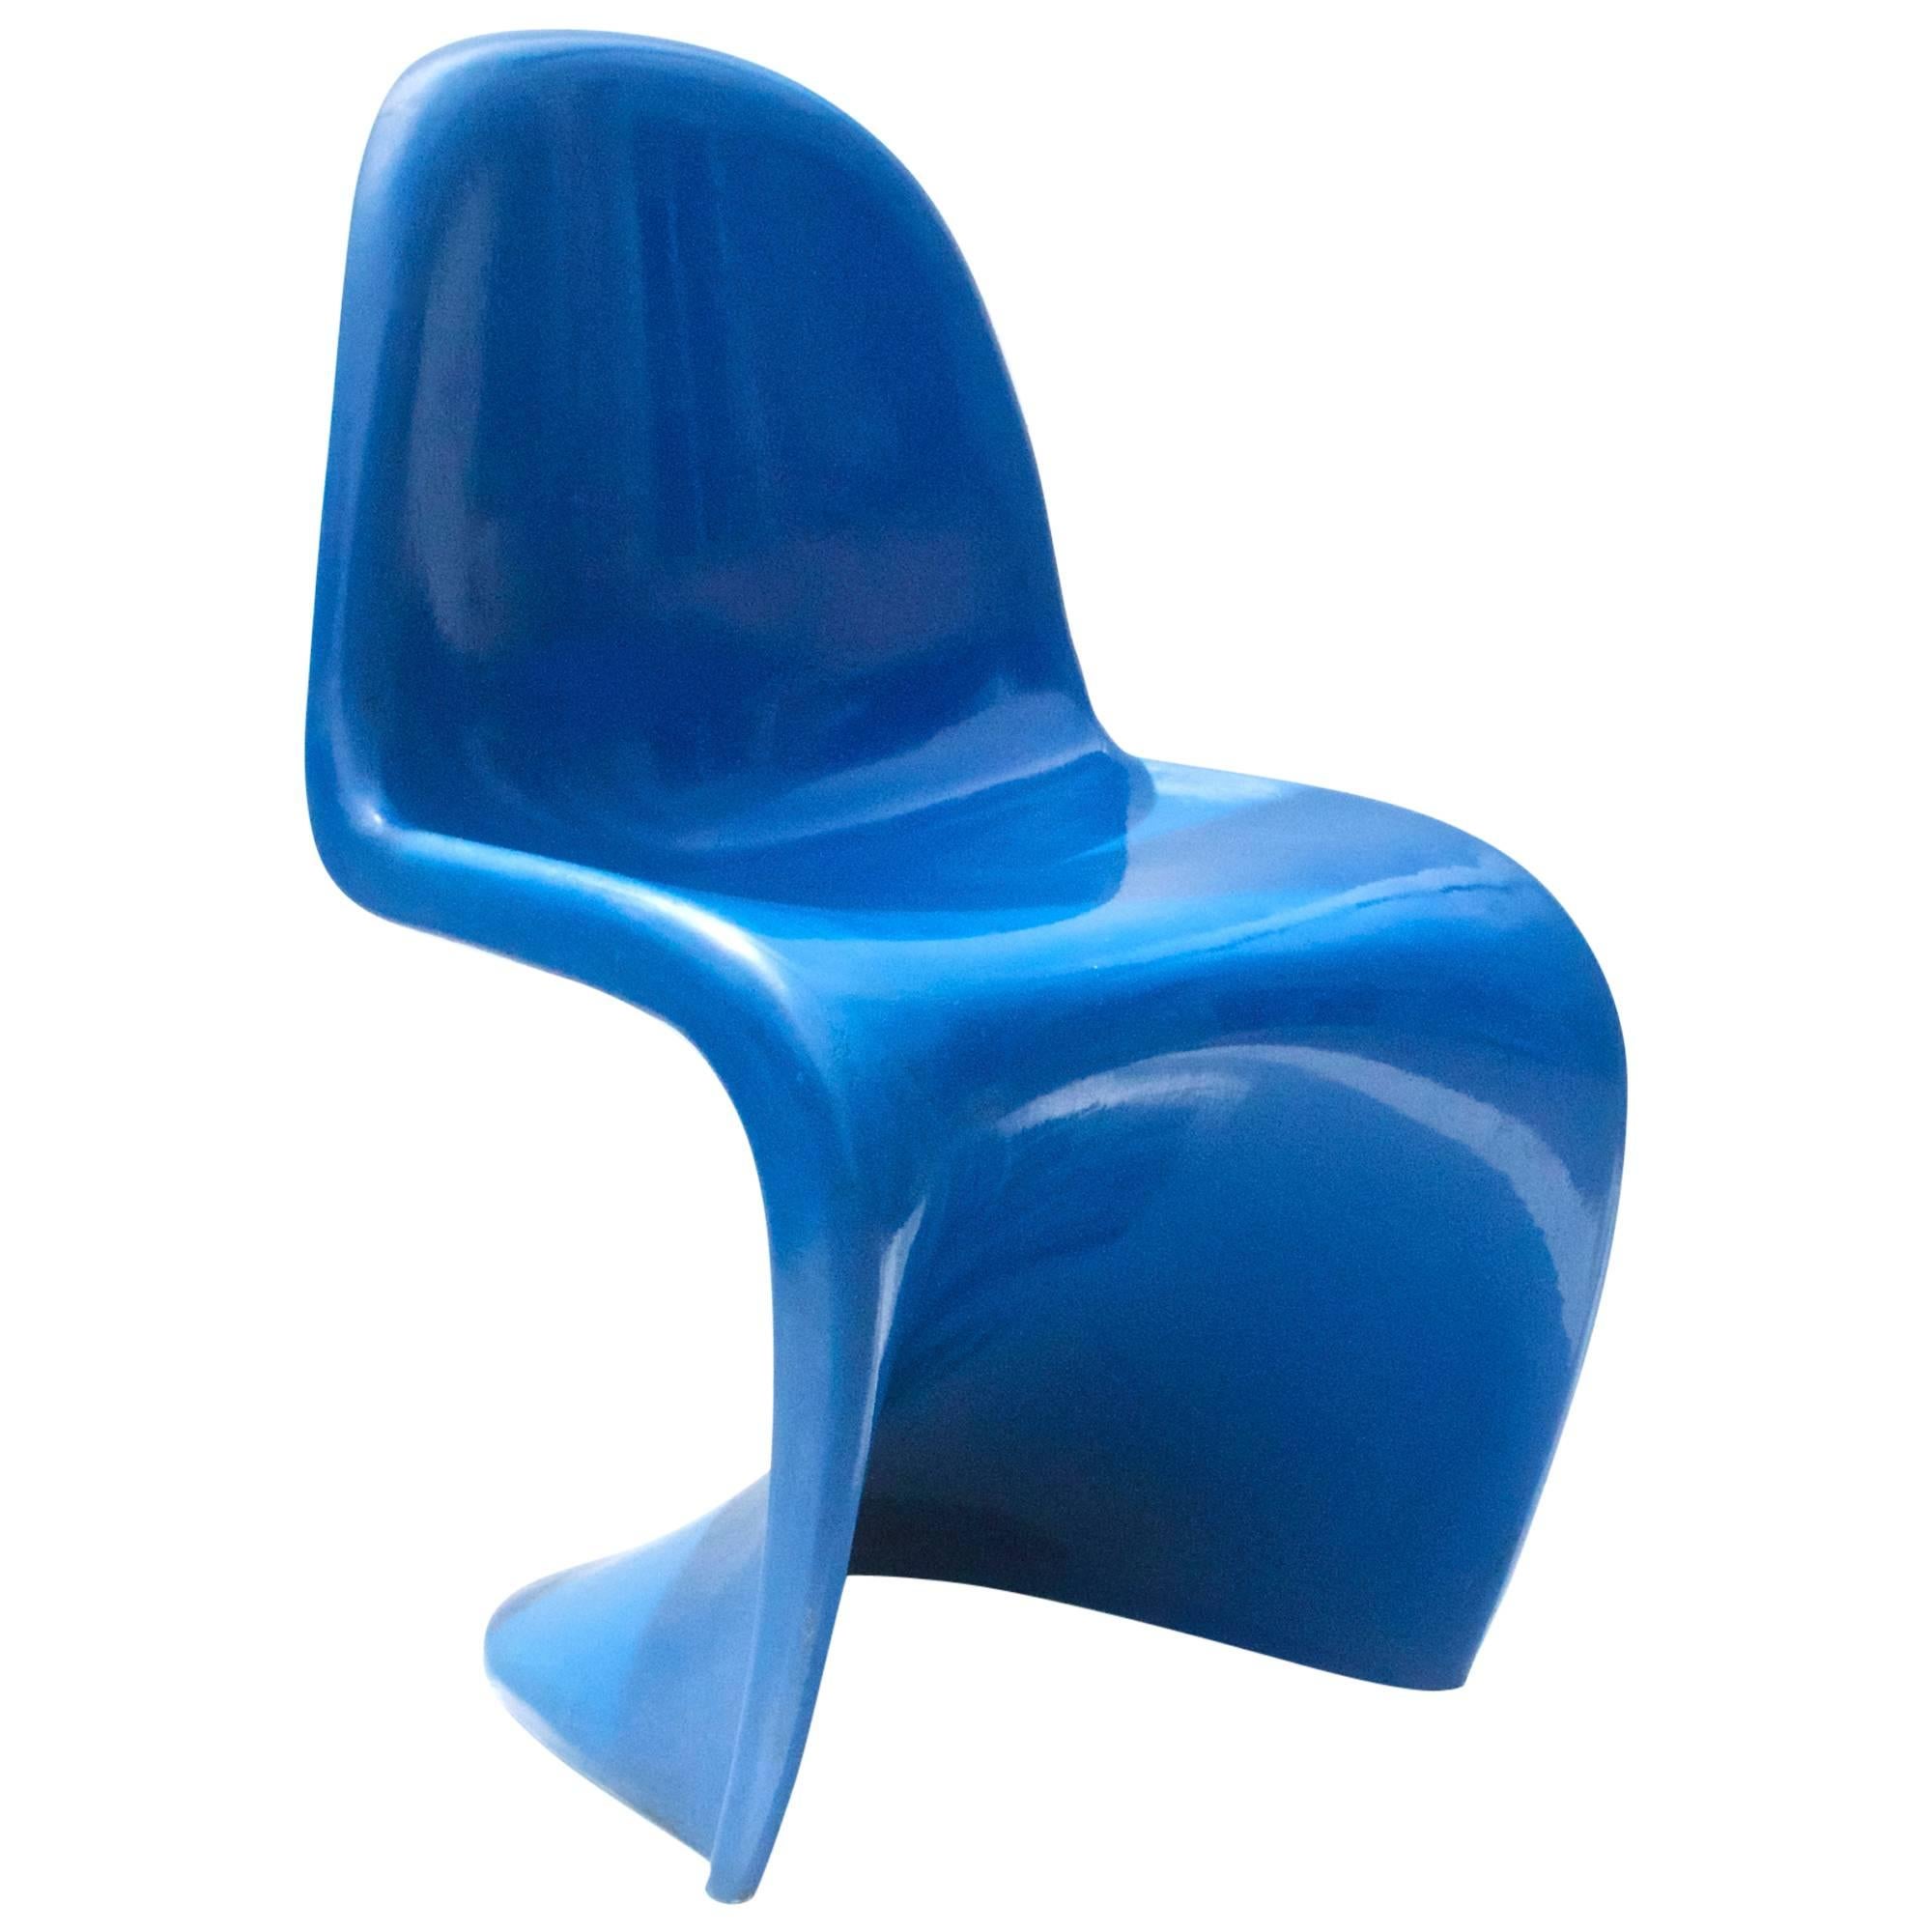 V. Panton "S" Chair For Sale